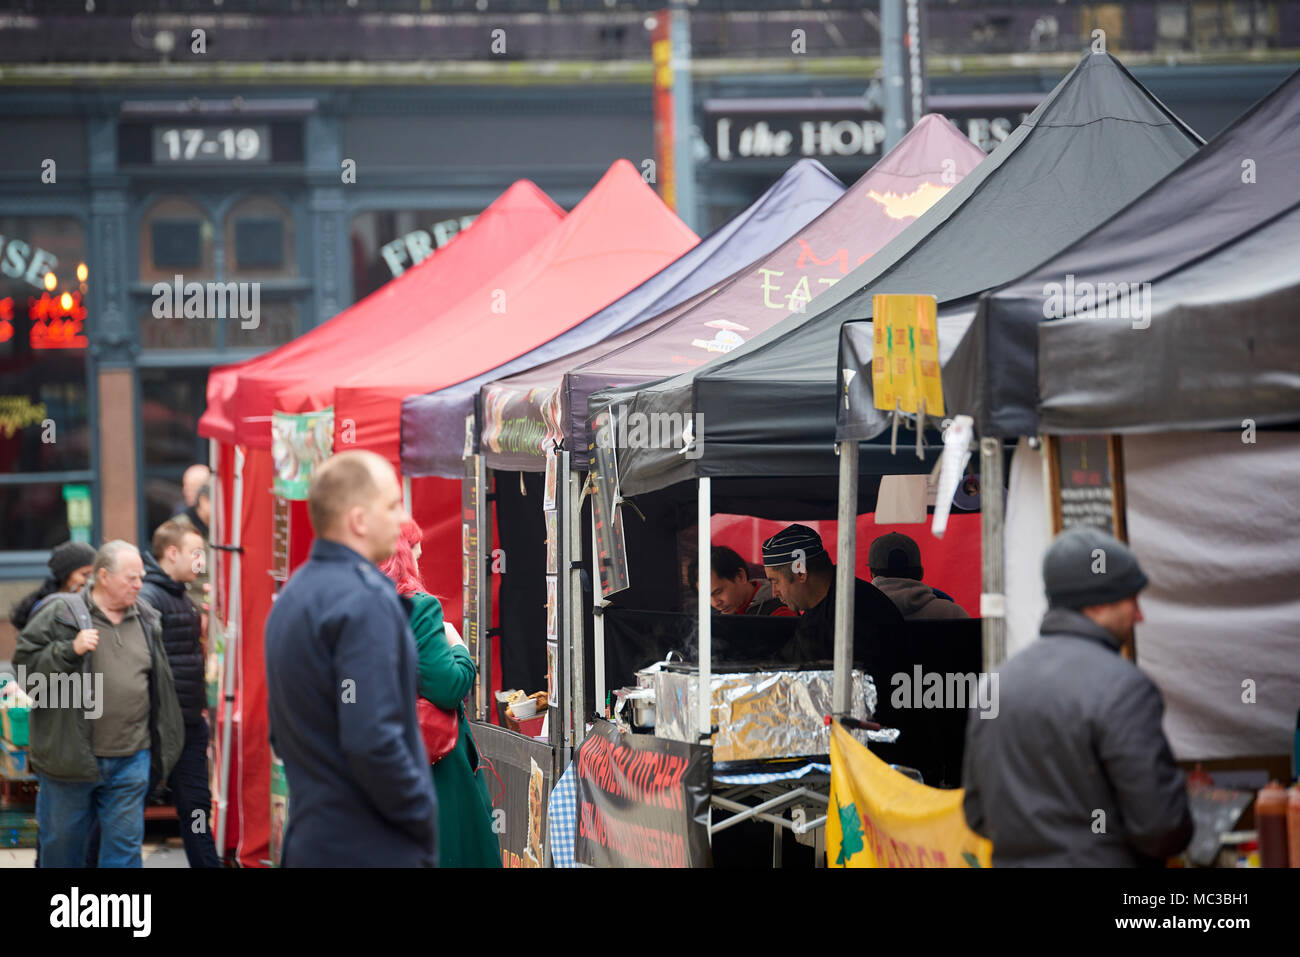 Detail of Street food market stalls in Lyric Square, near Hammersmith. Stock Photo